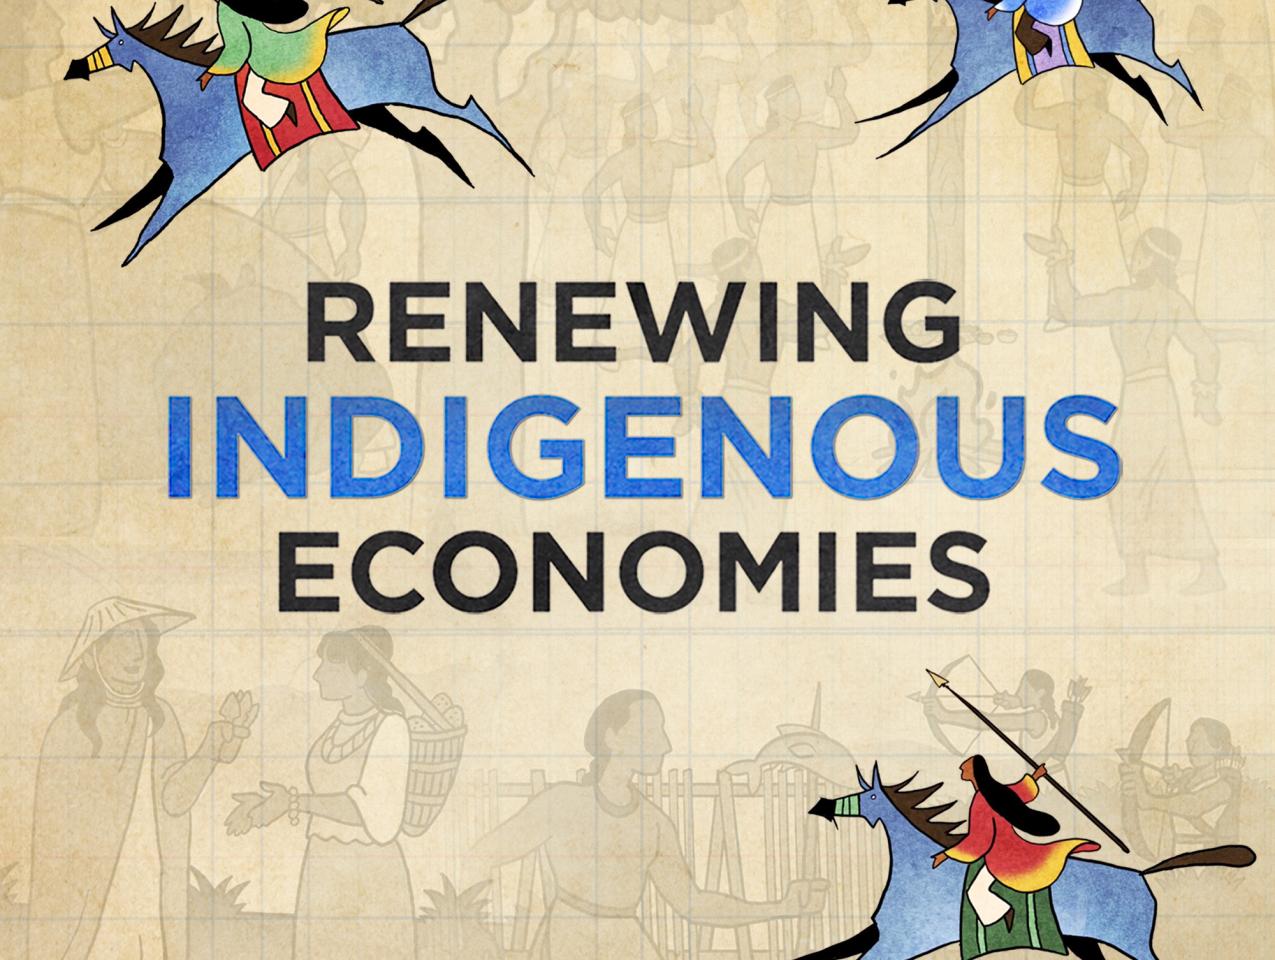 indigenous economies square image